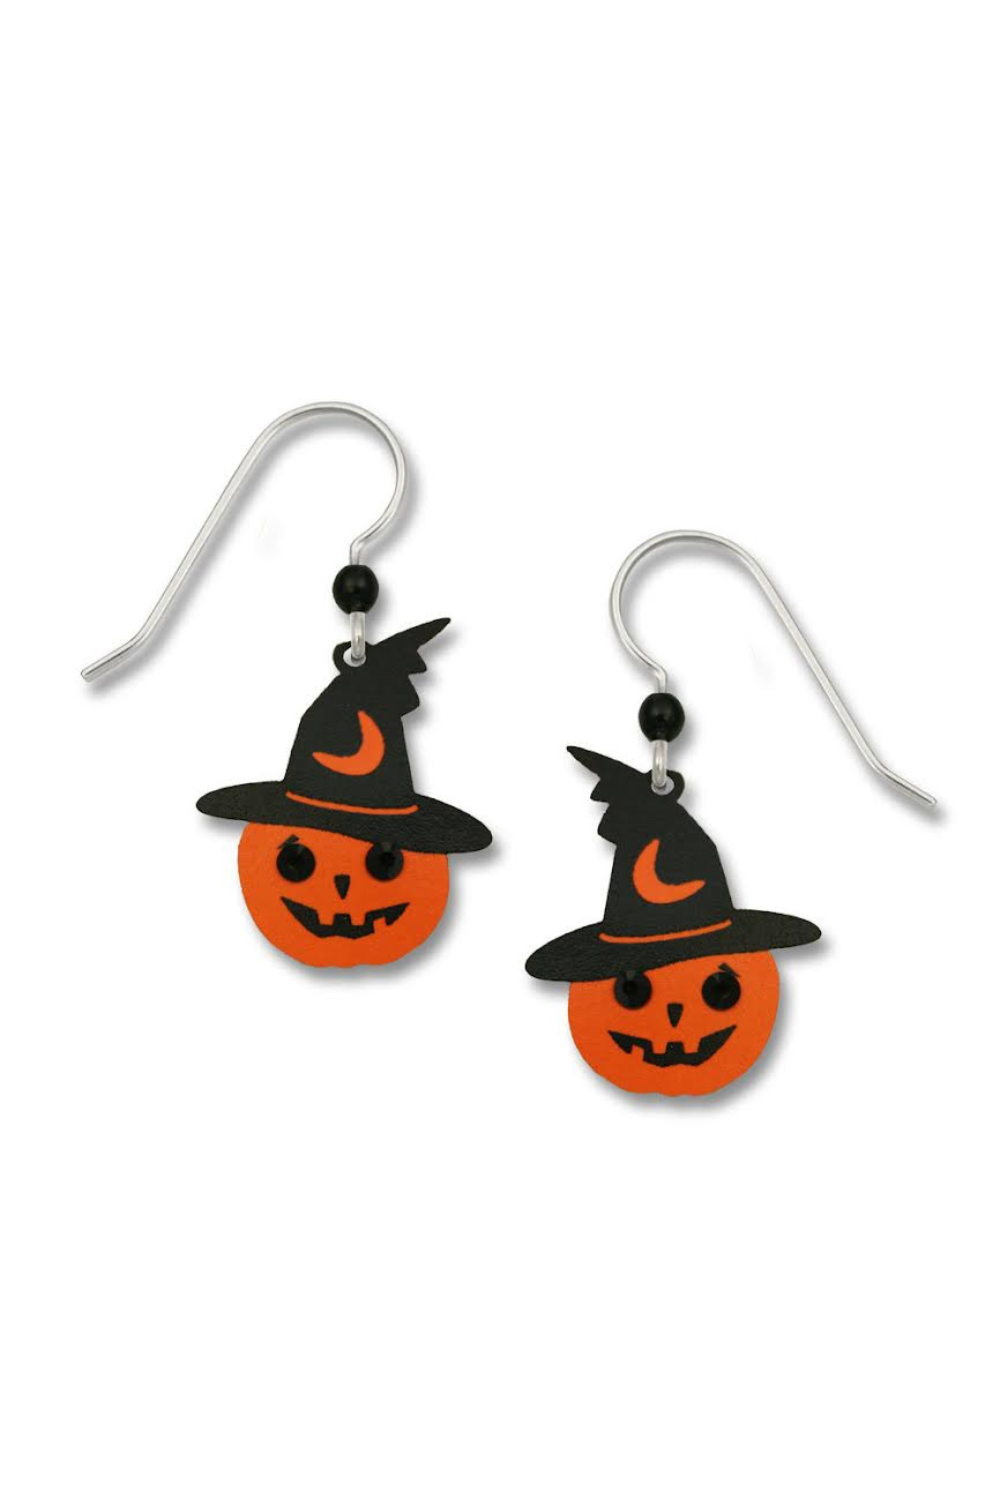 Sienna Sky Halloween Pumpkin Earrings